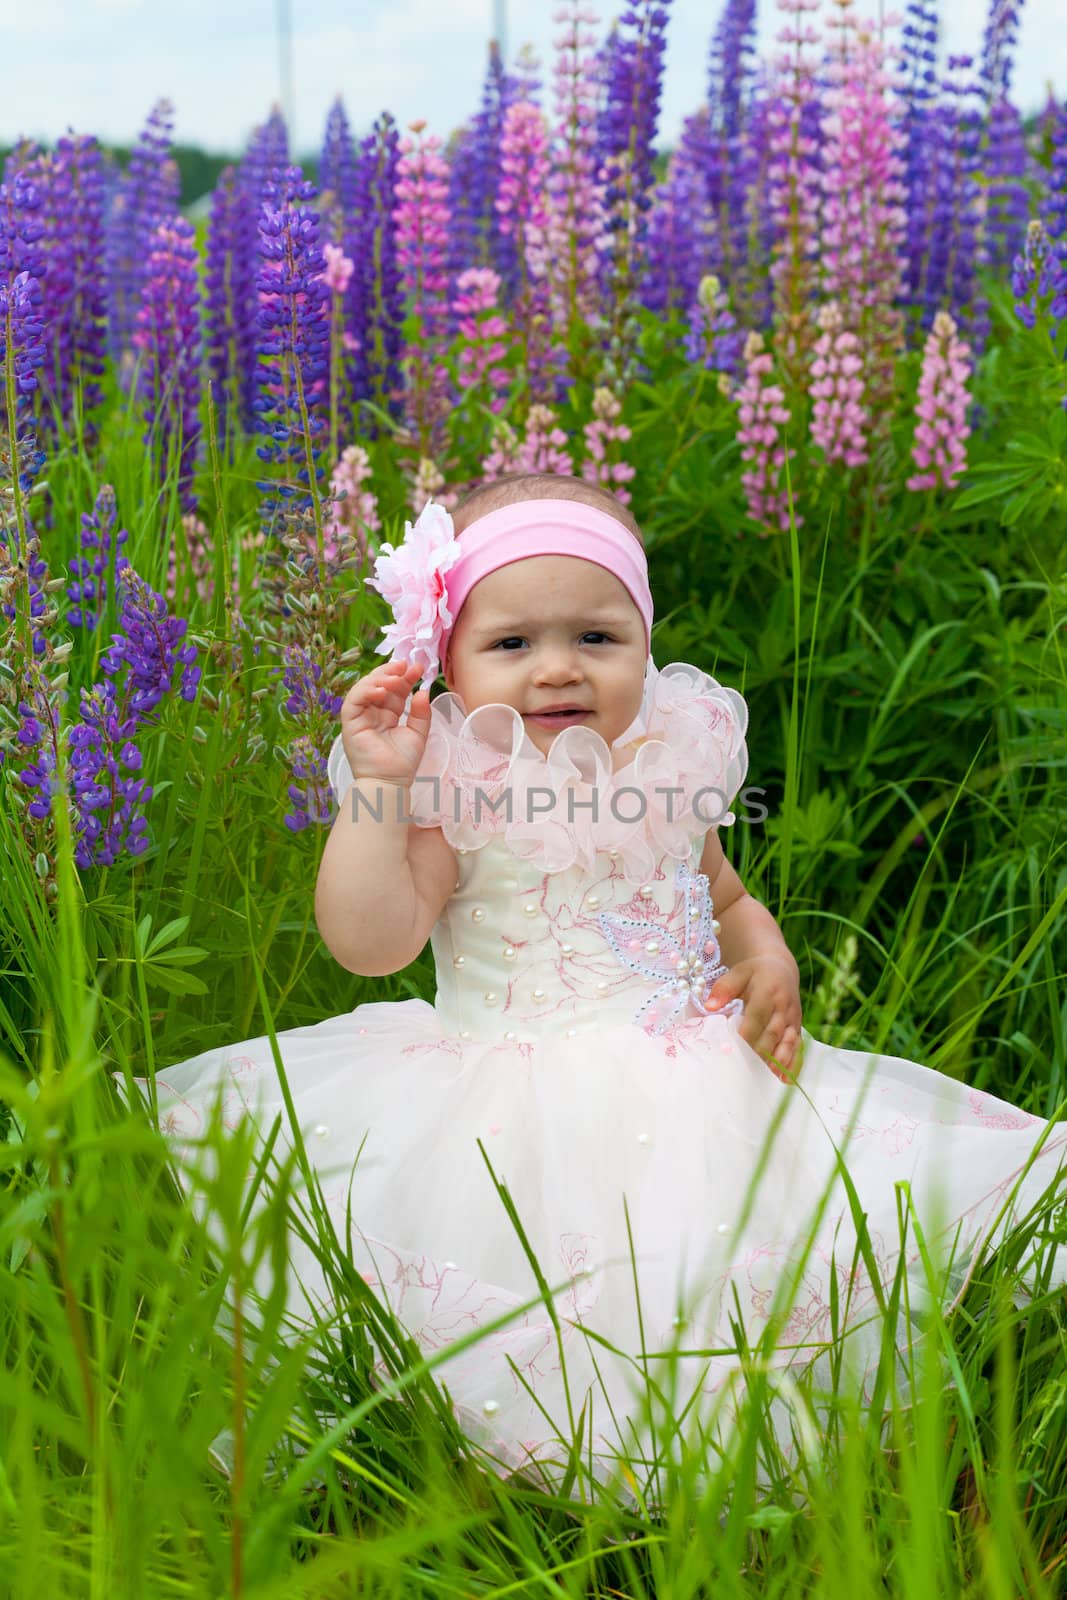 Little girl in an elegant dress sits on a grass